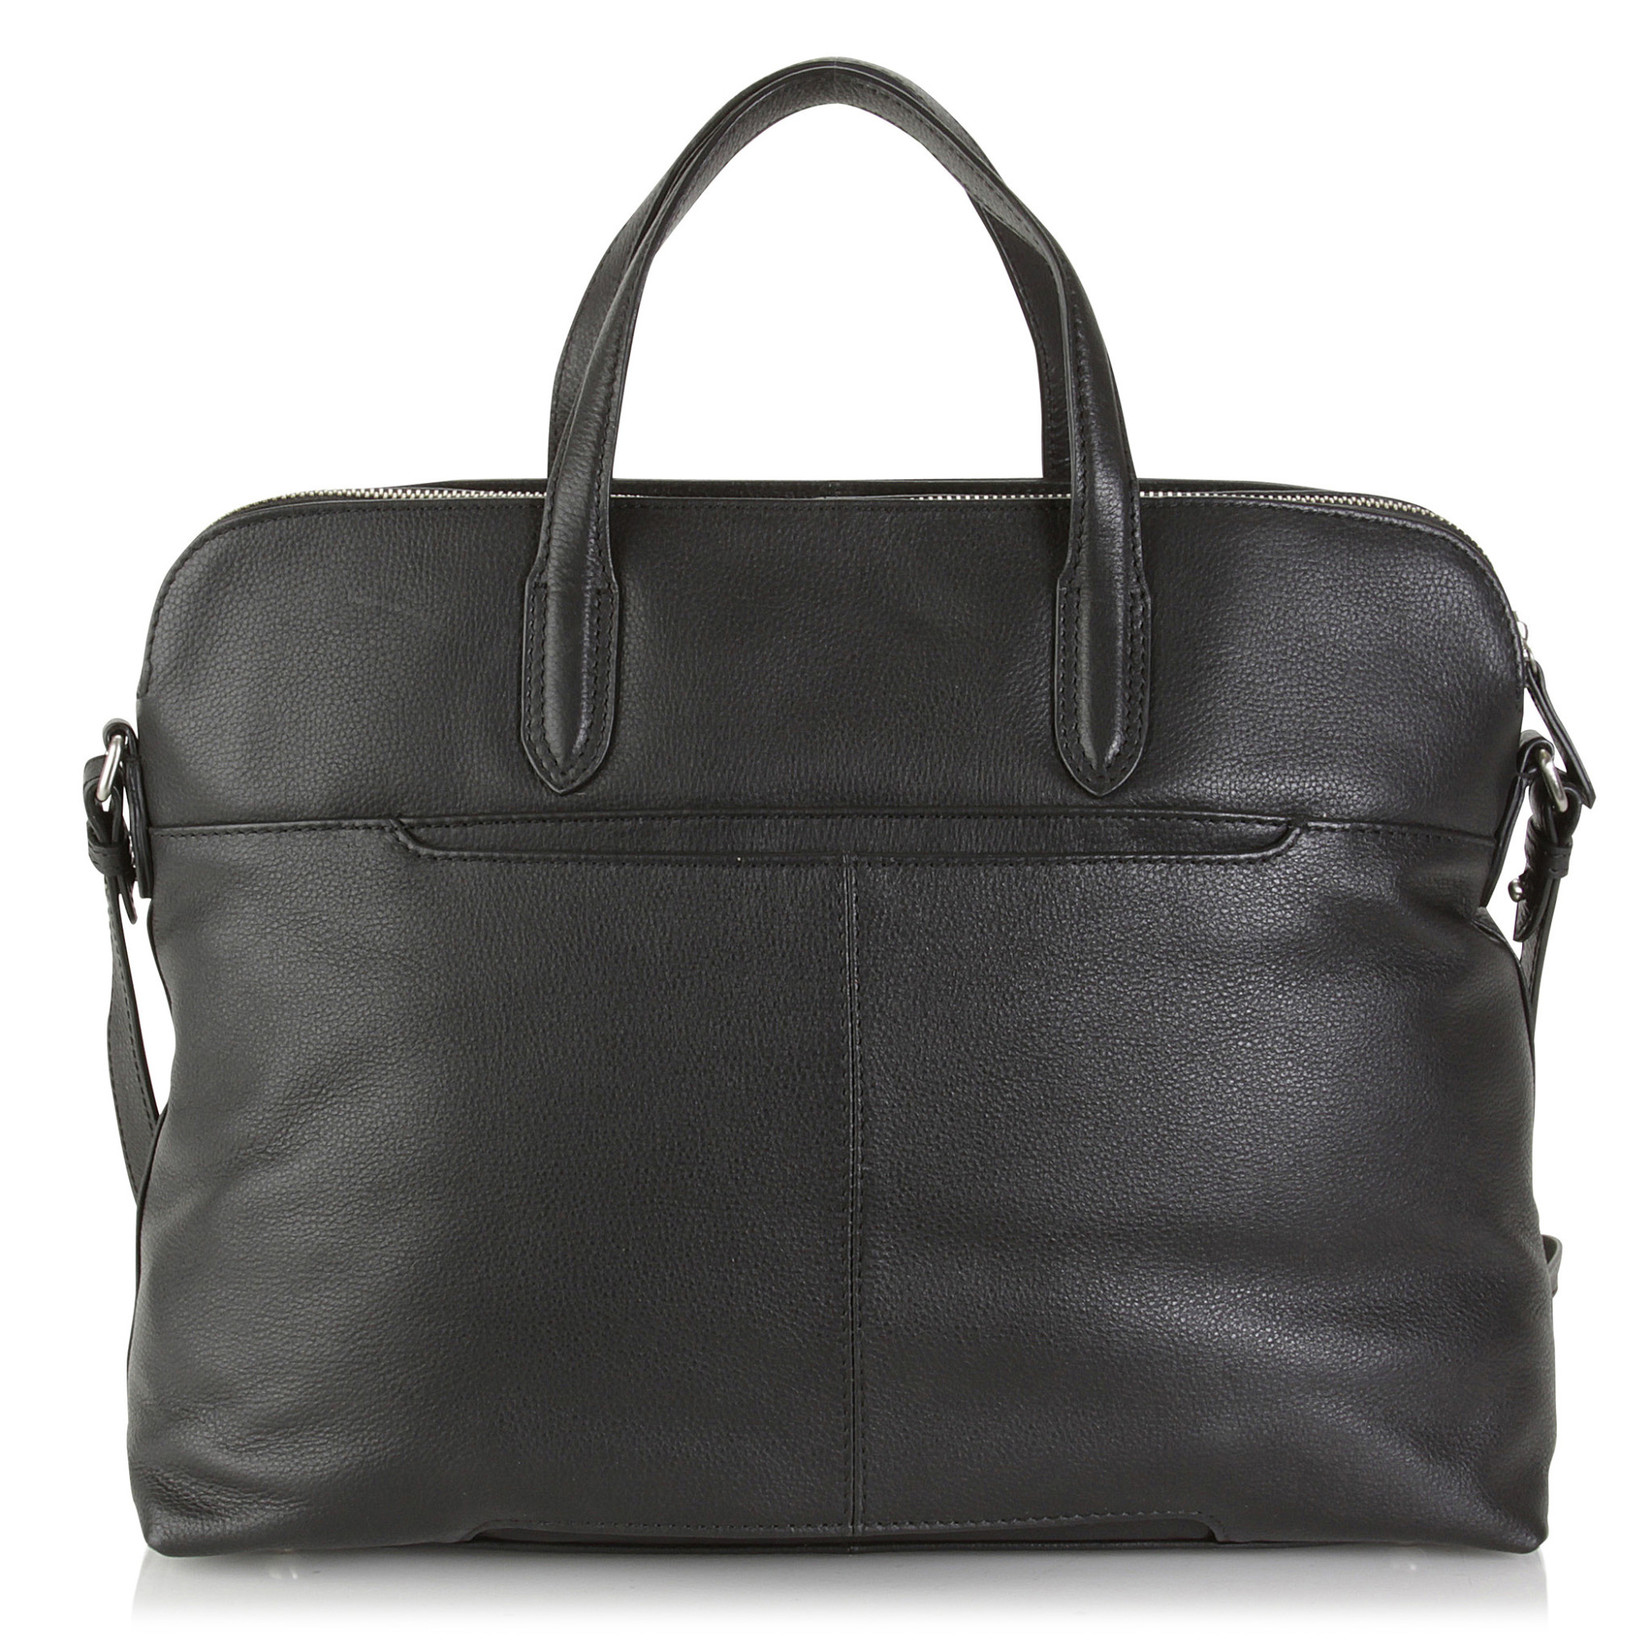 Work Bag - Black Leather